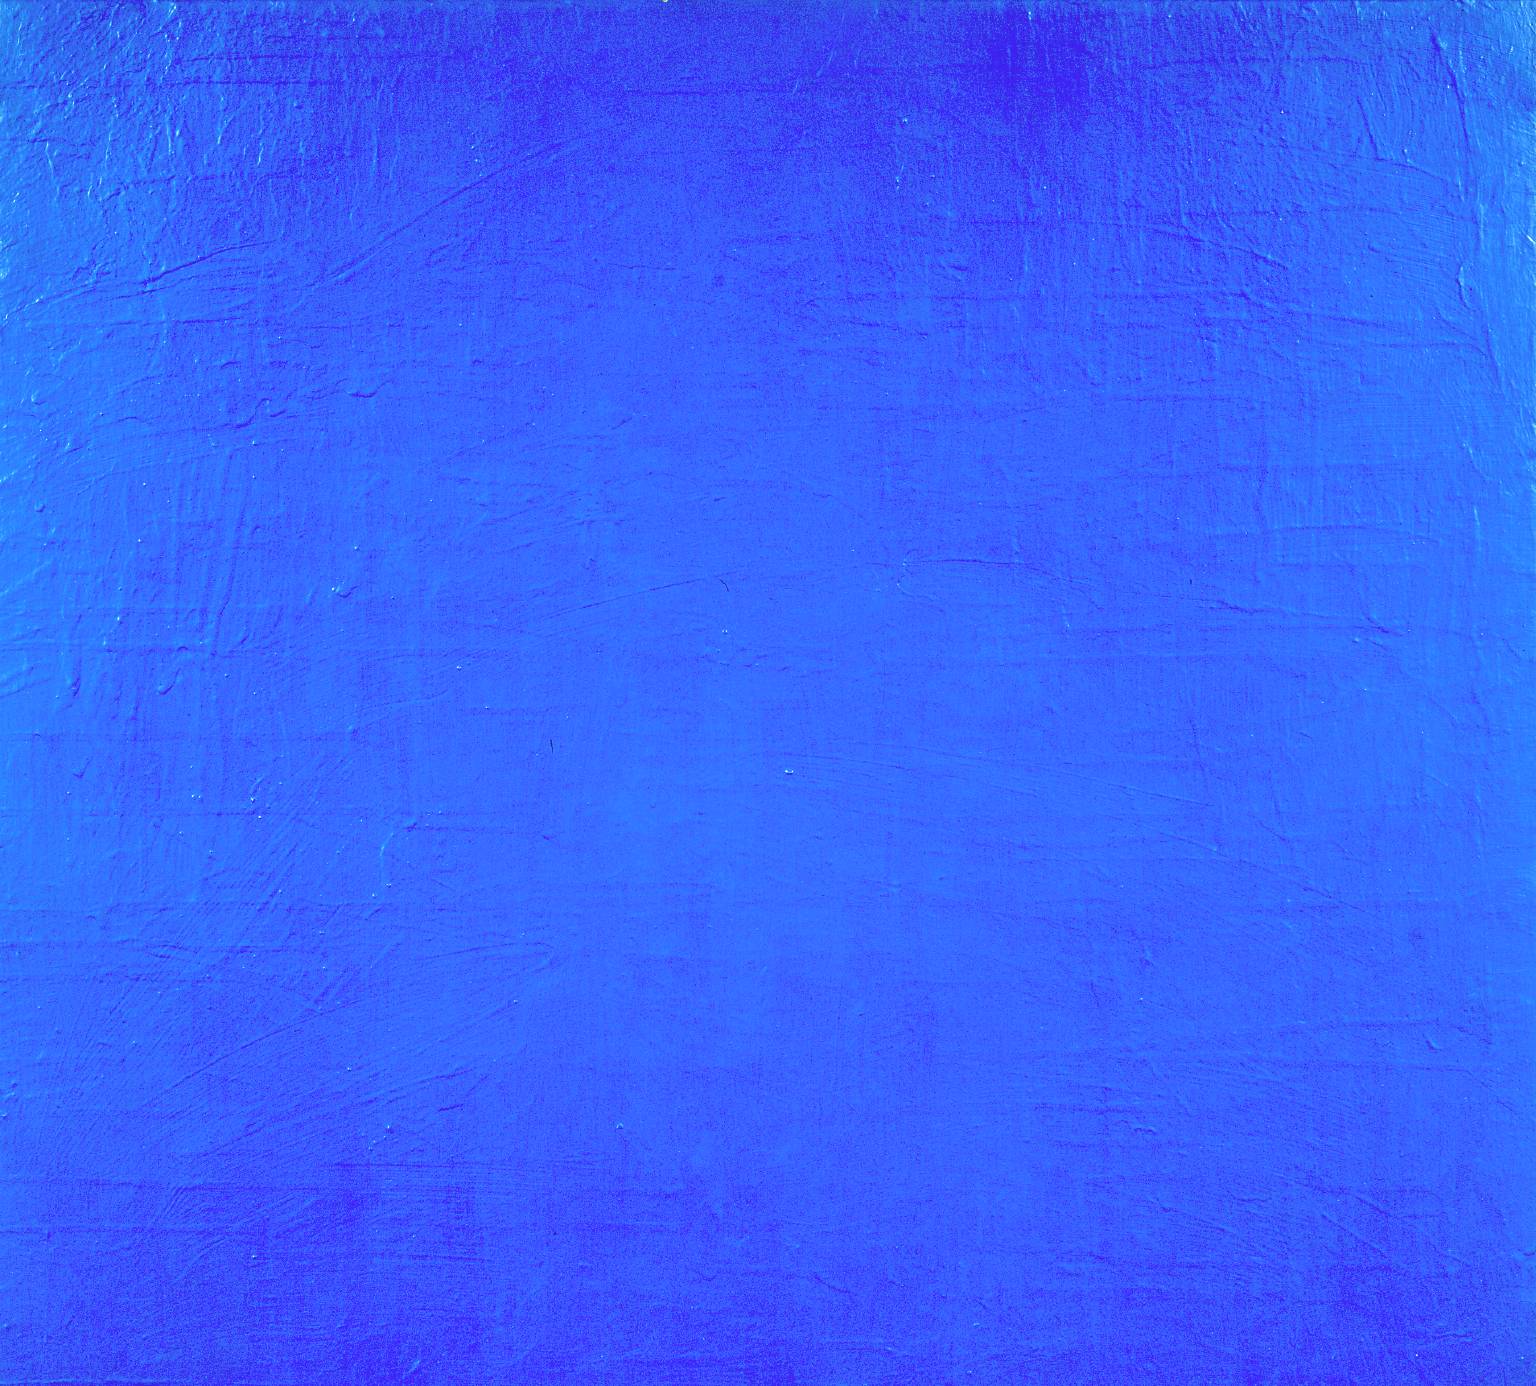 The Blue Veil (1.2.3.4.5.7. VI 1970) (1970)